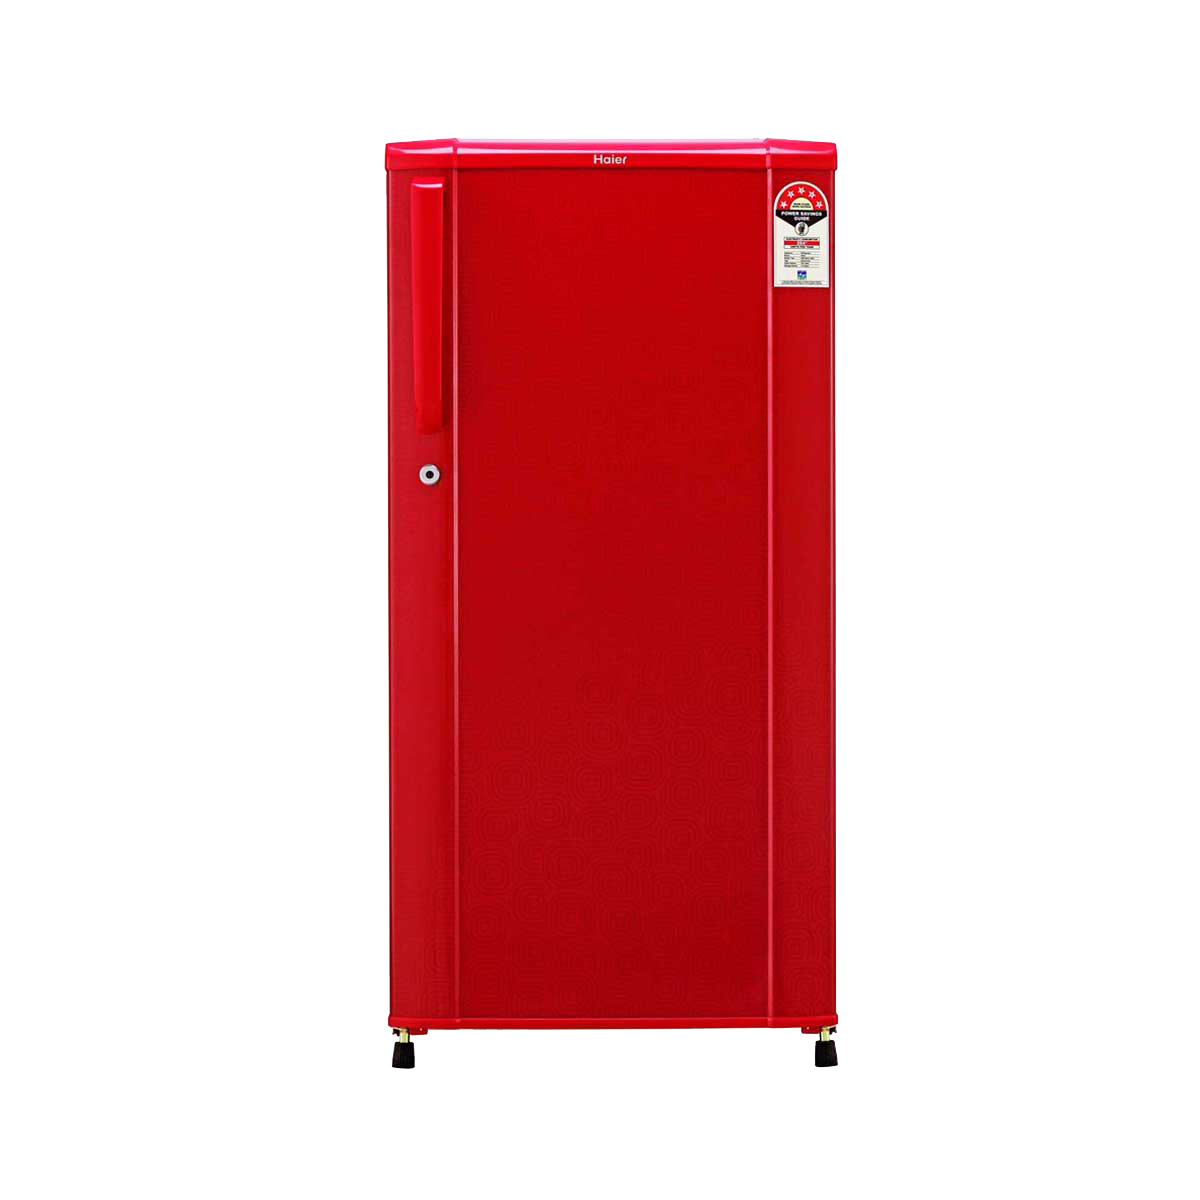 Single Door Refrigerator Image PNG Image